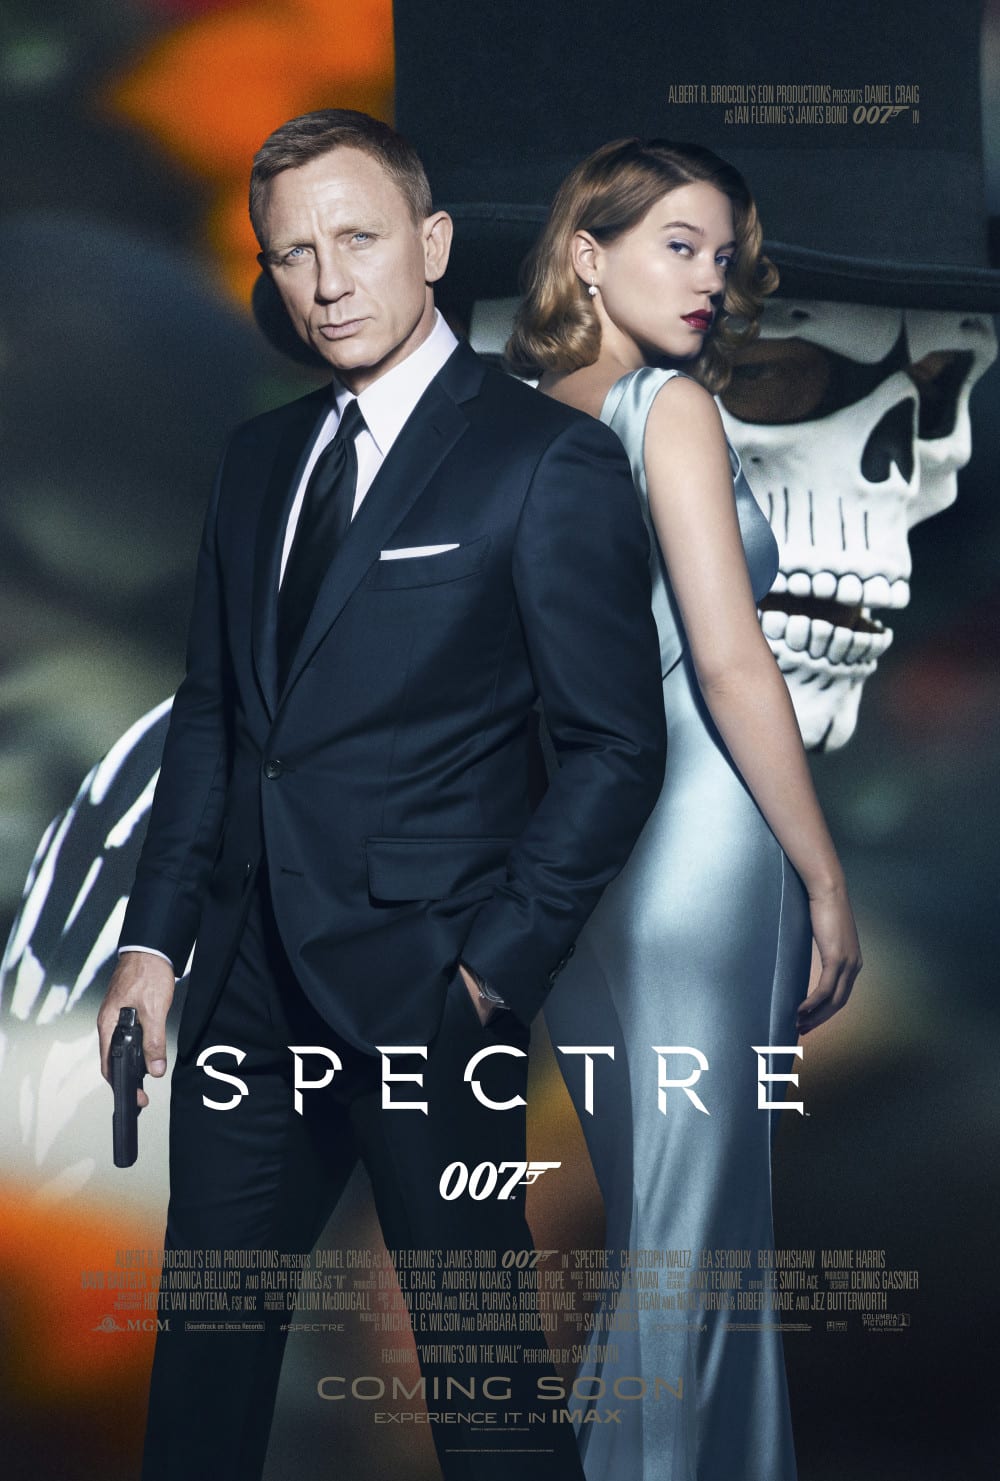 007 spectre poster-min